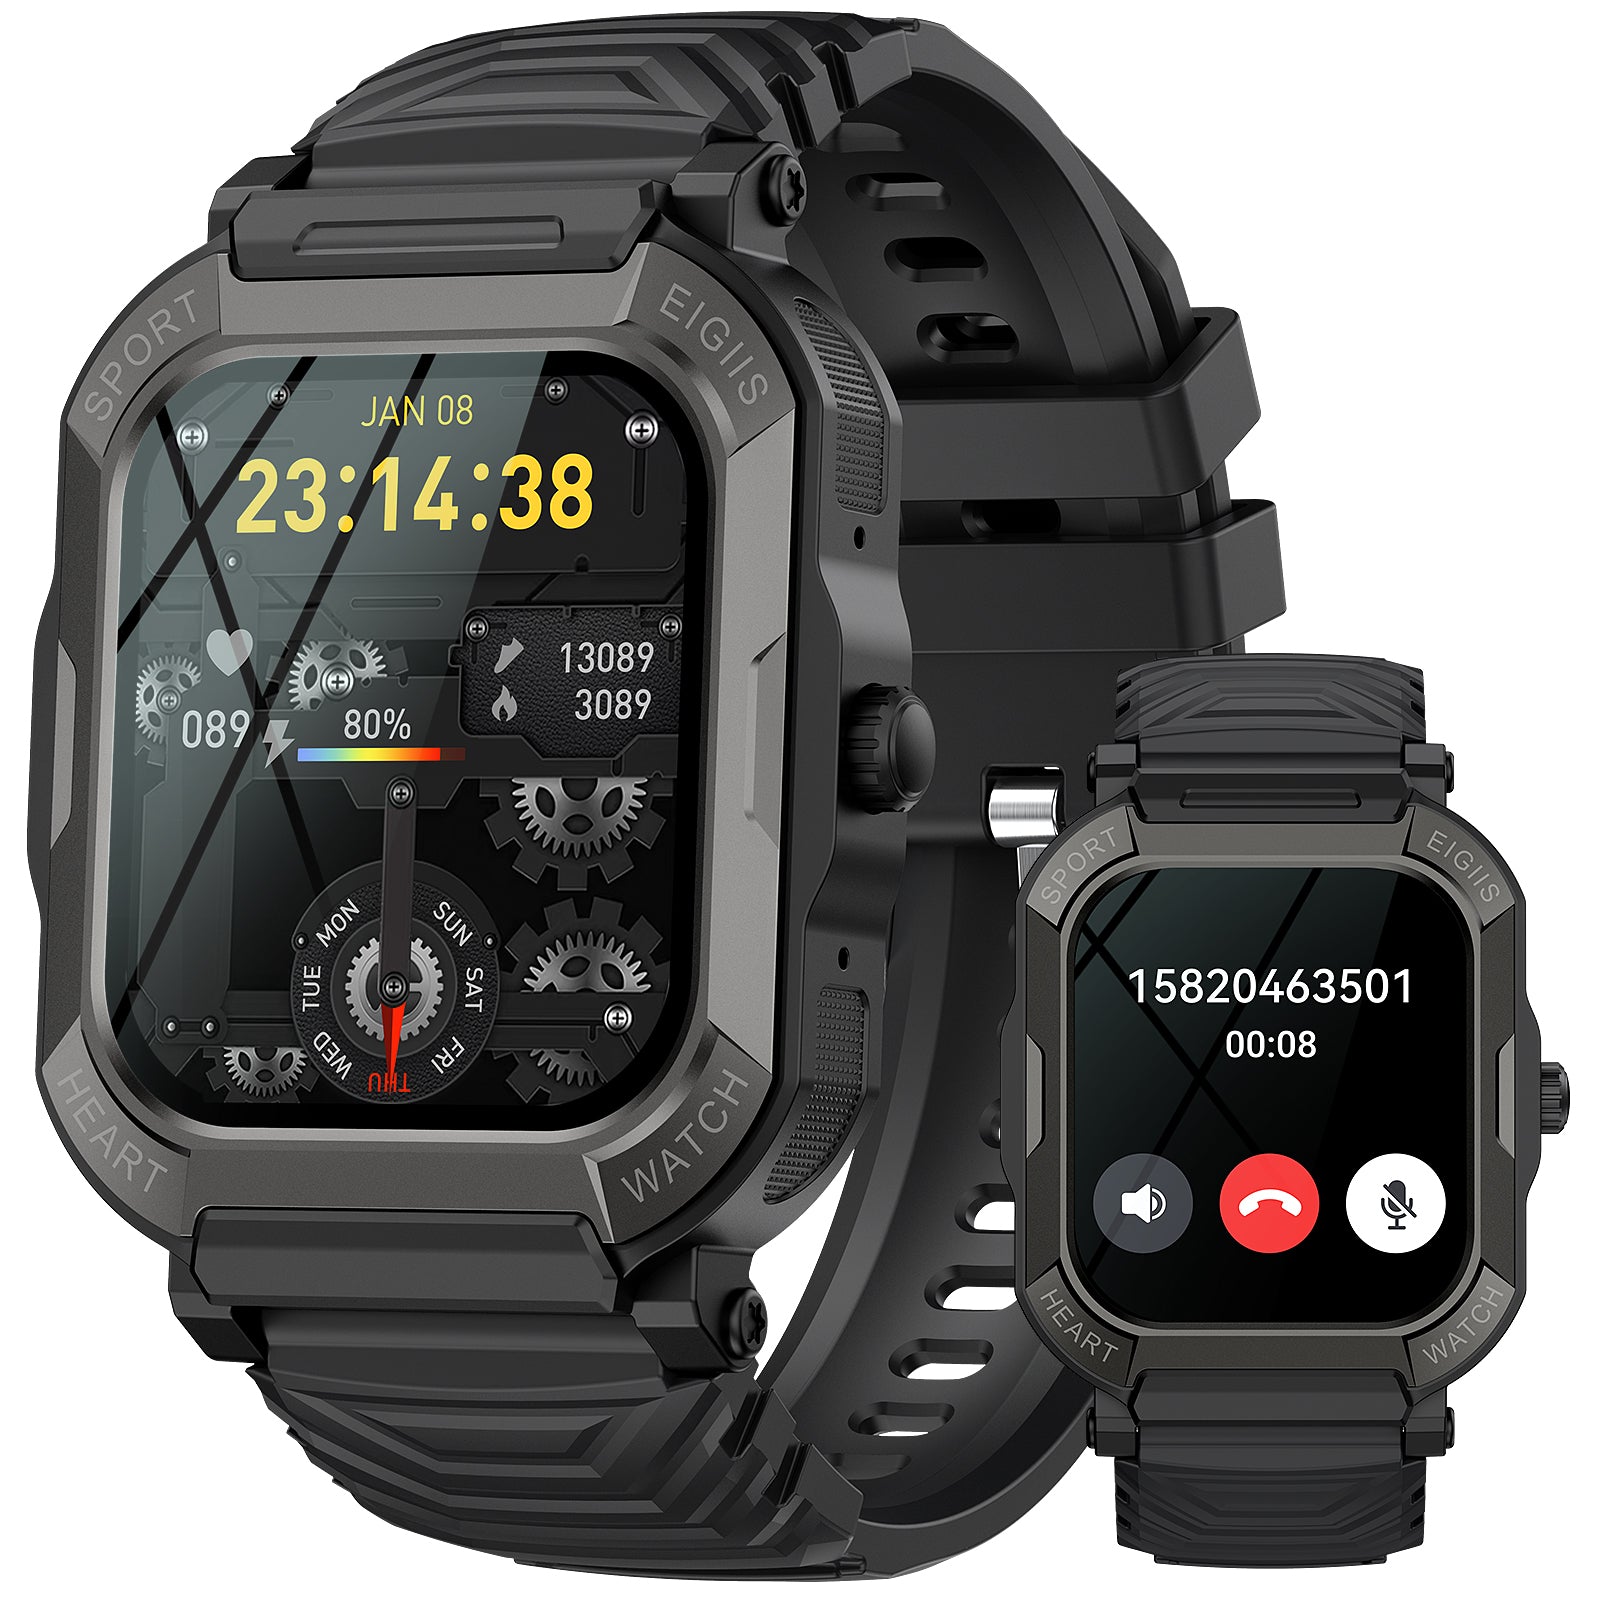 EIGIIS Smart Watch Fitness Tracker Watch con monitor Ecuador